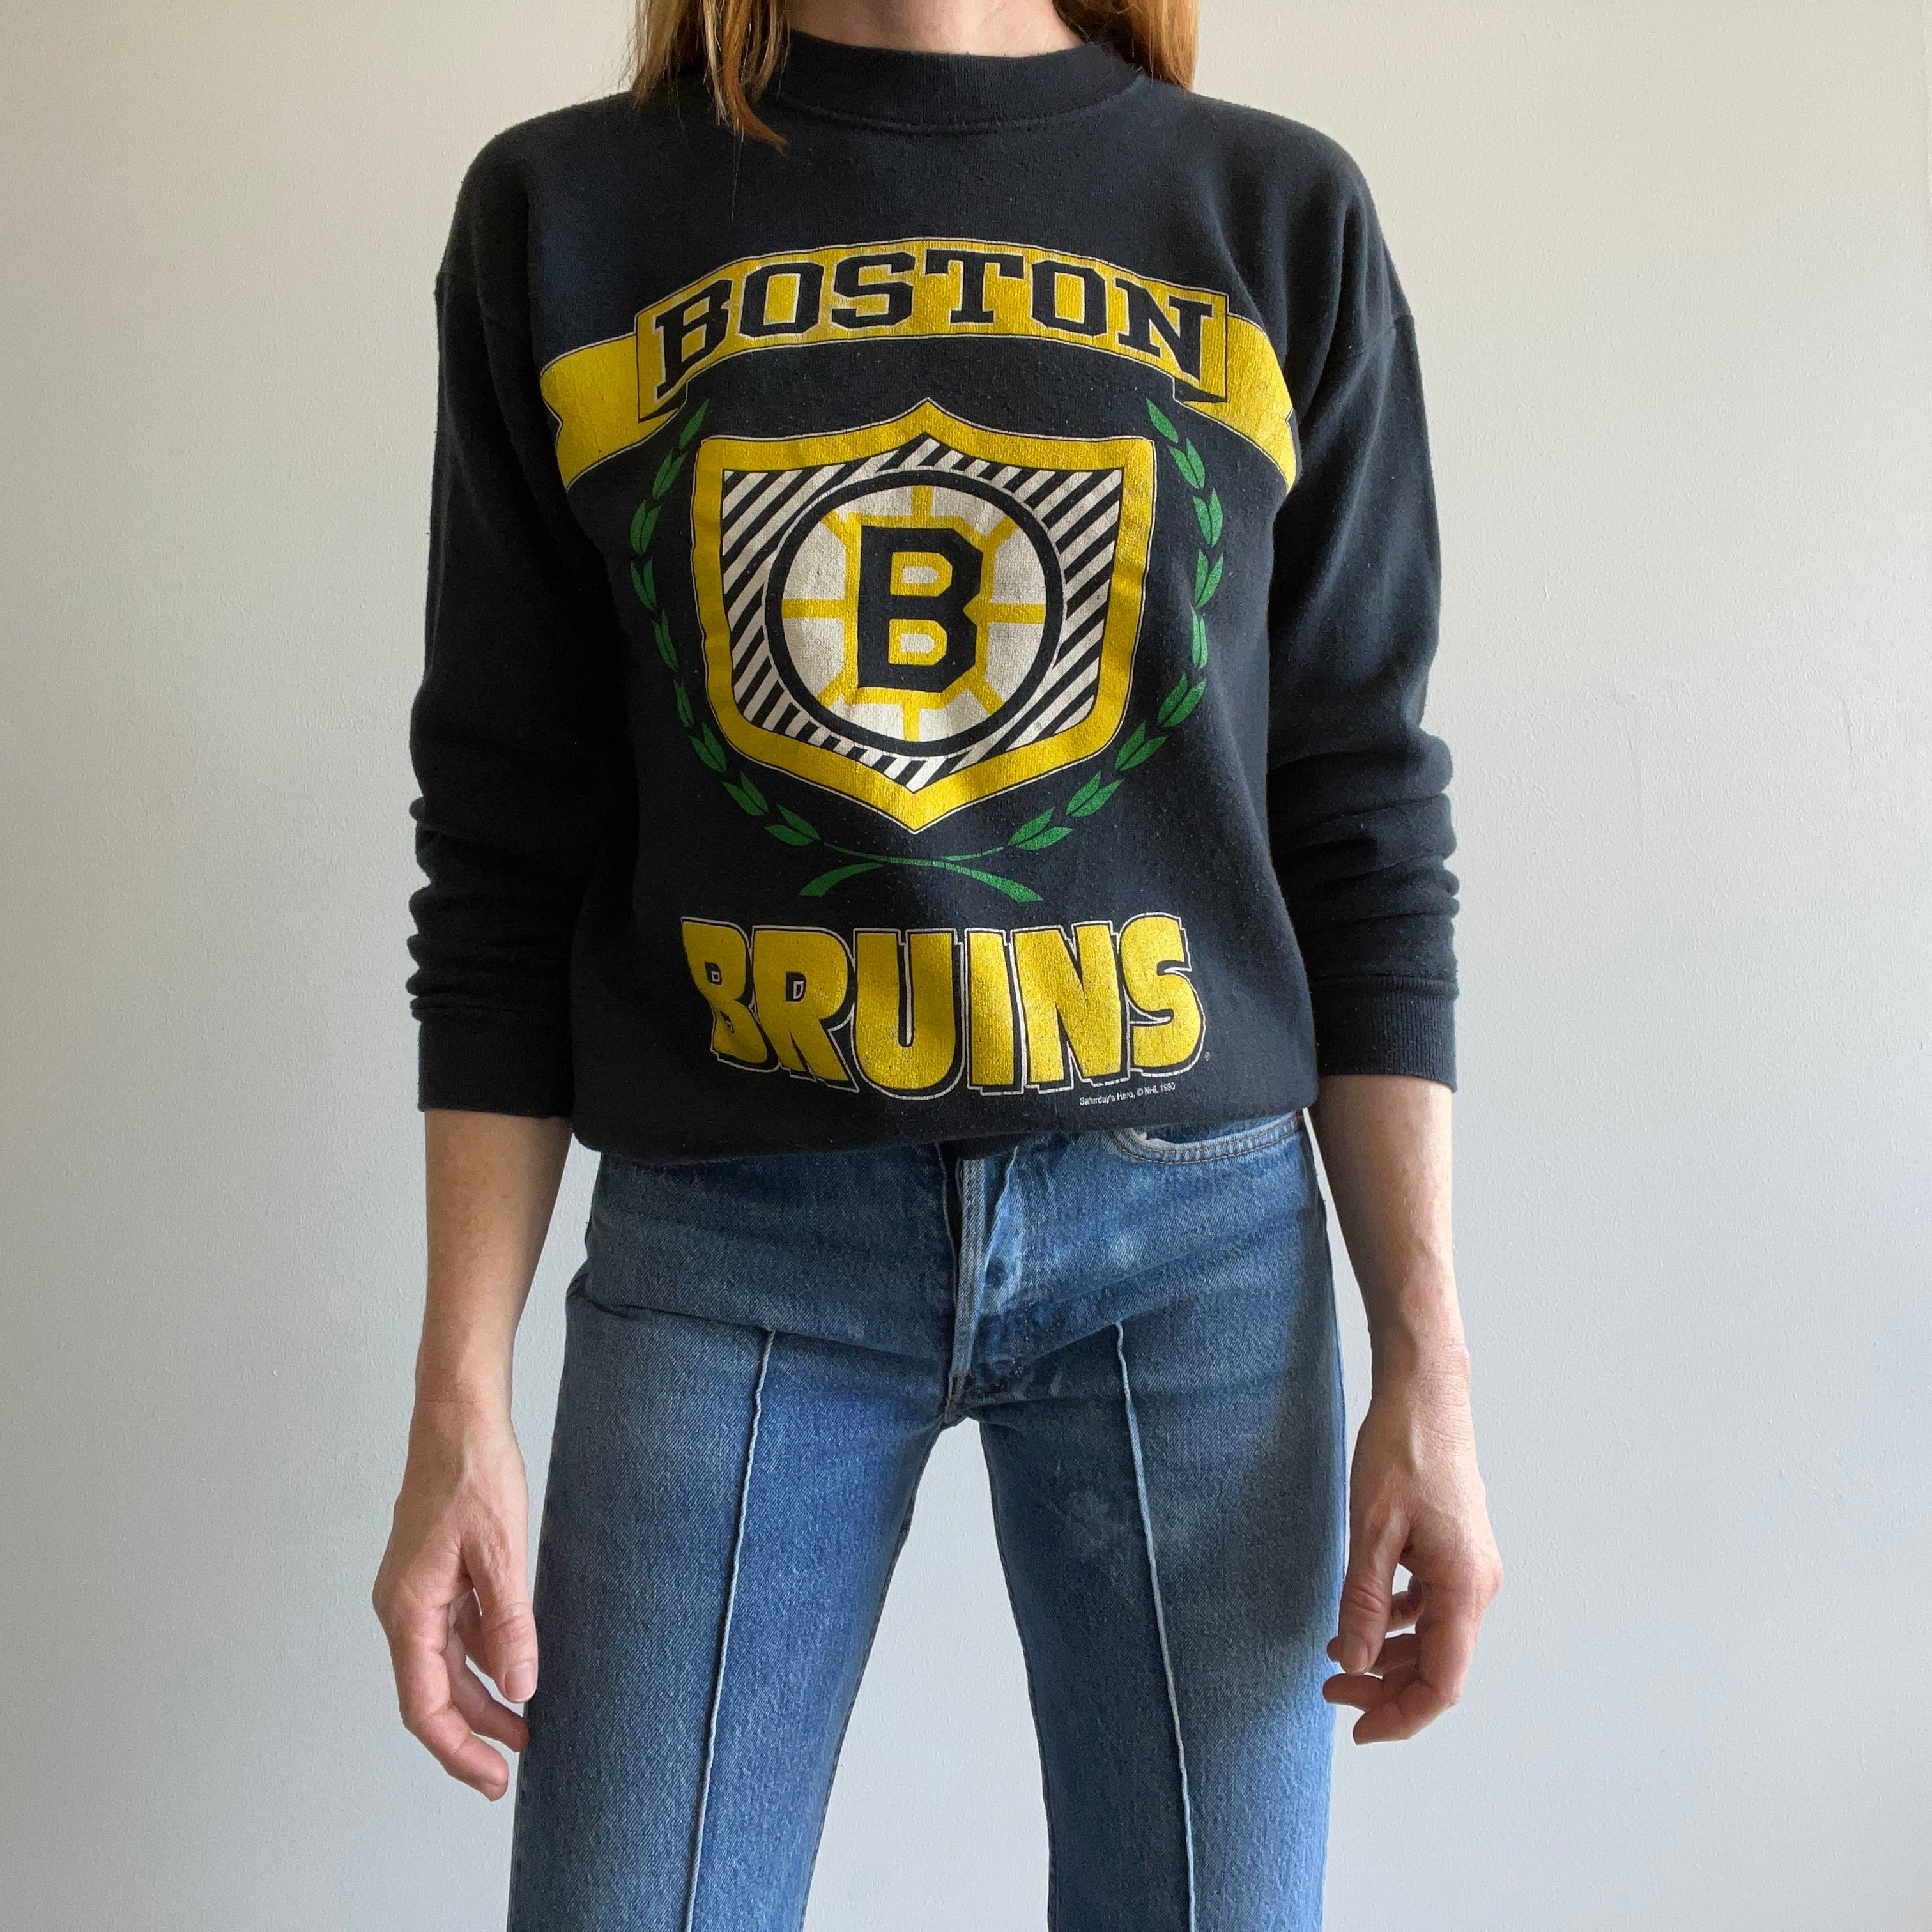 1990 NHL Boston Bruins Sweat taille plus petite